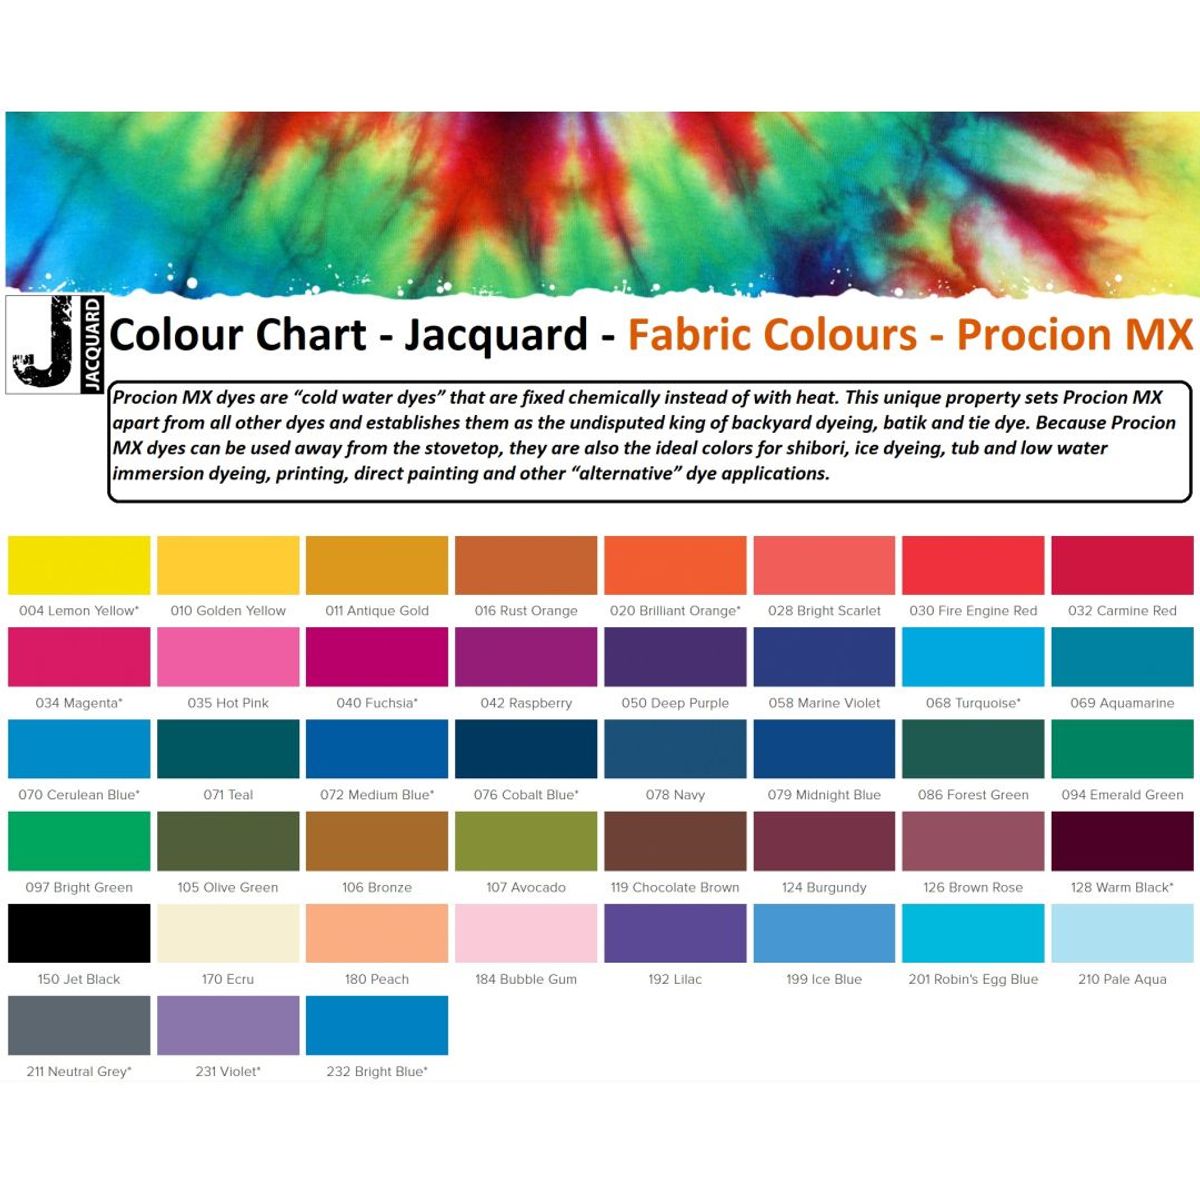 Jacquard - Procion MX Dye - Fabric Textile - Fuchsia 040